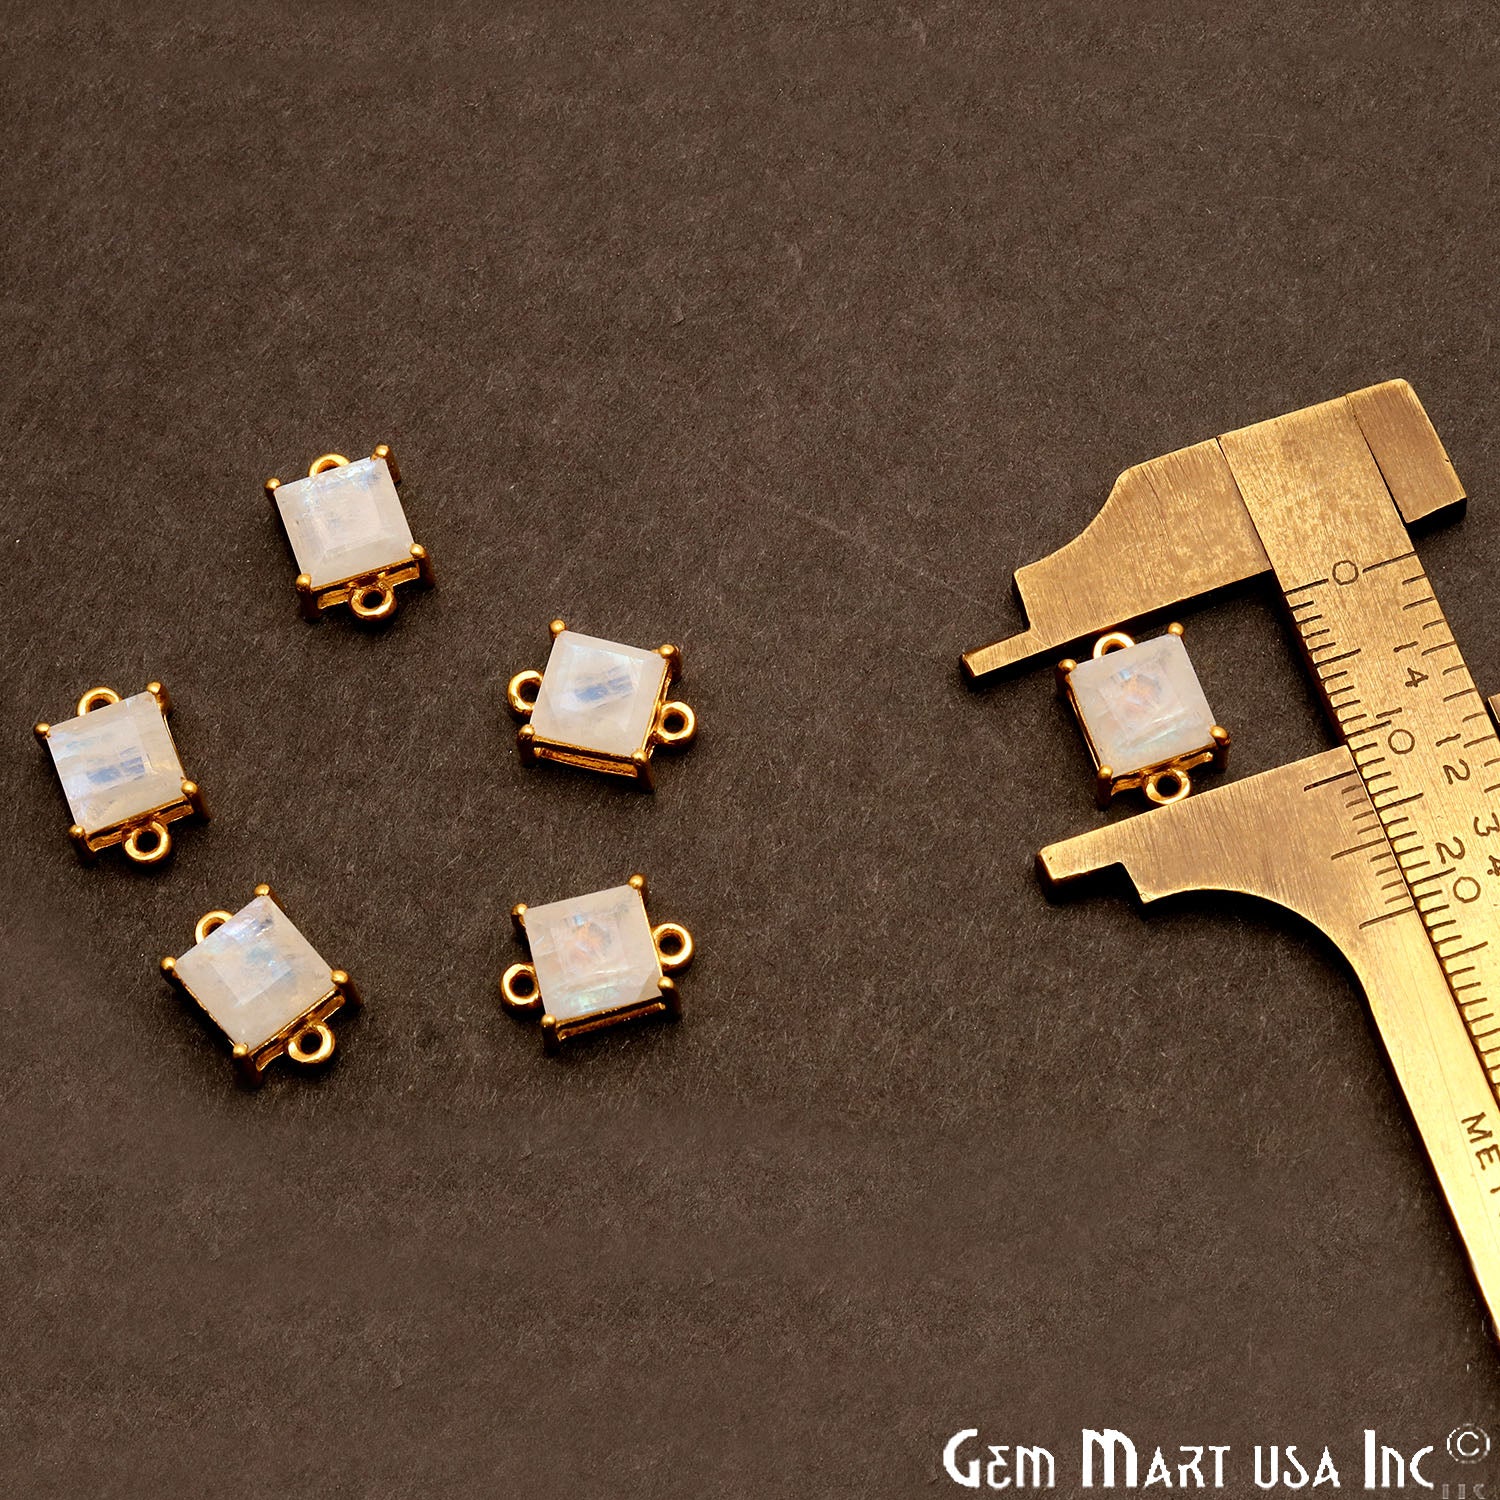 Rainbow Moonstone Prong Setting Gold Plated Flashy Gemstone Connector - GemMartUSA